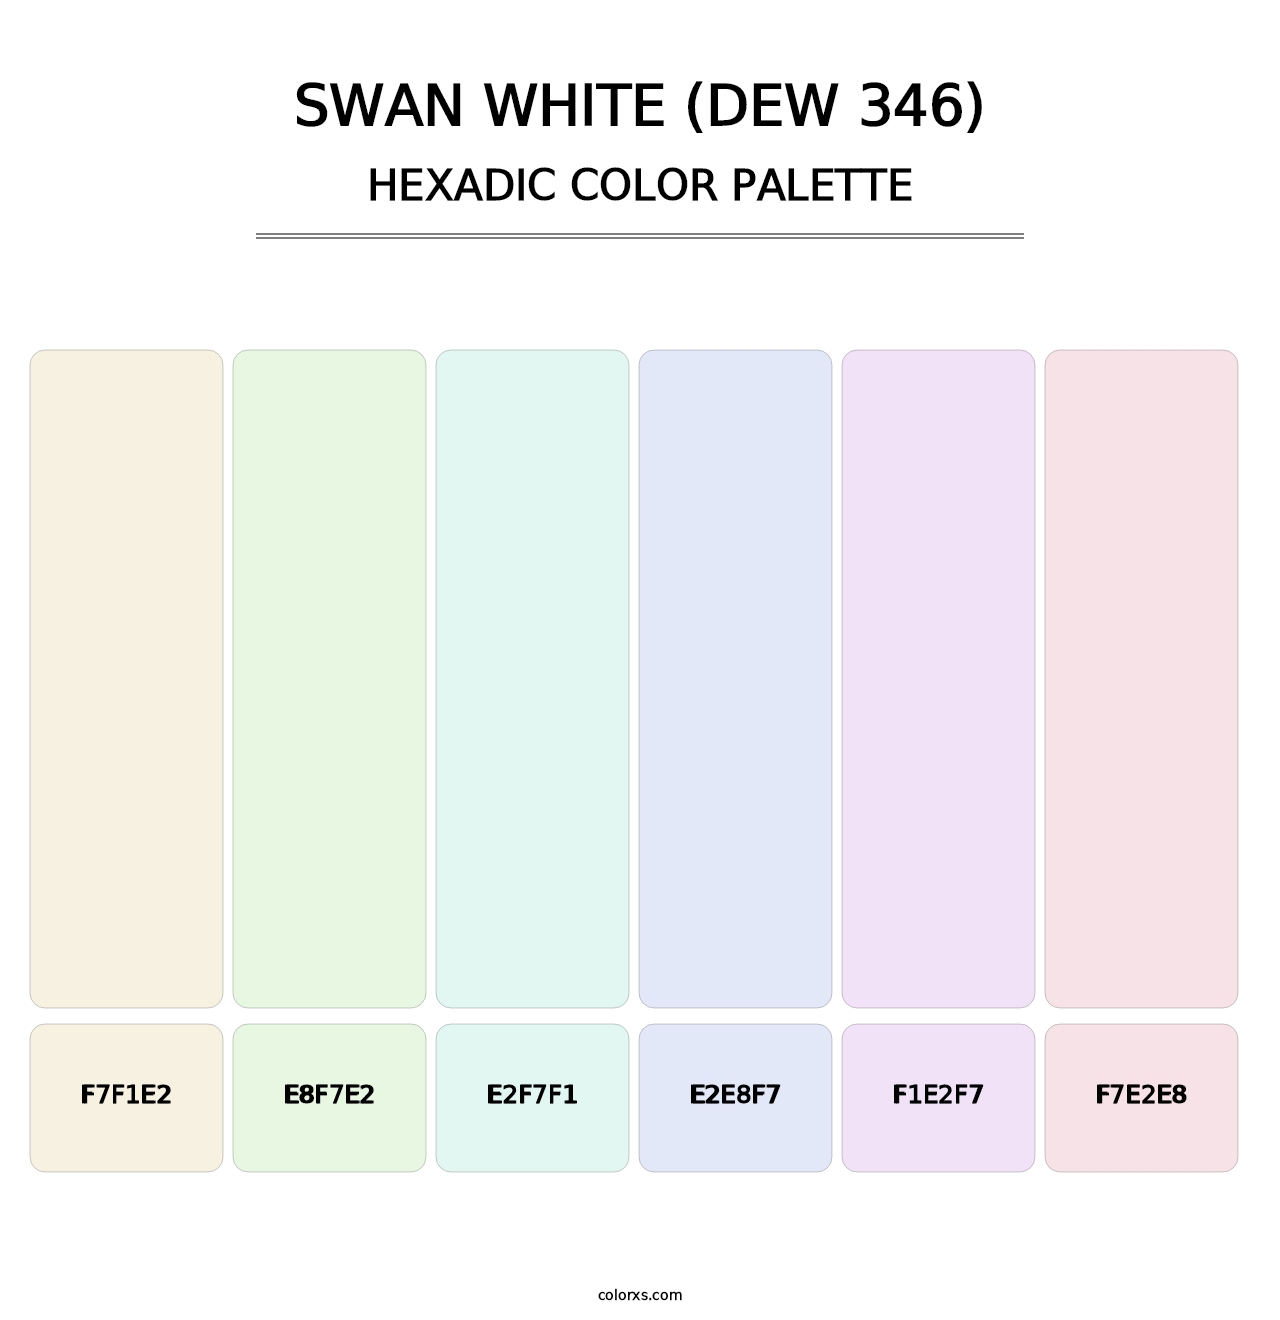 Swan White (DEW 346) - Hexadic Color Palette